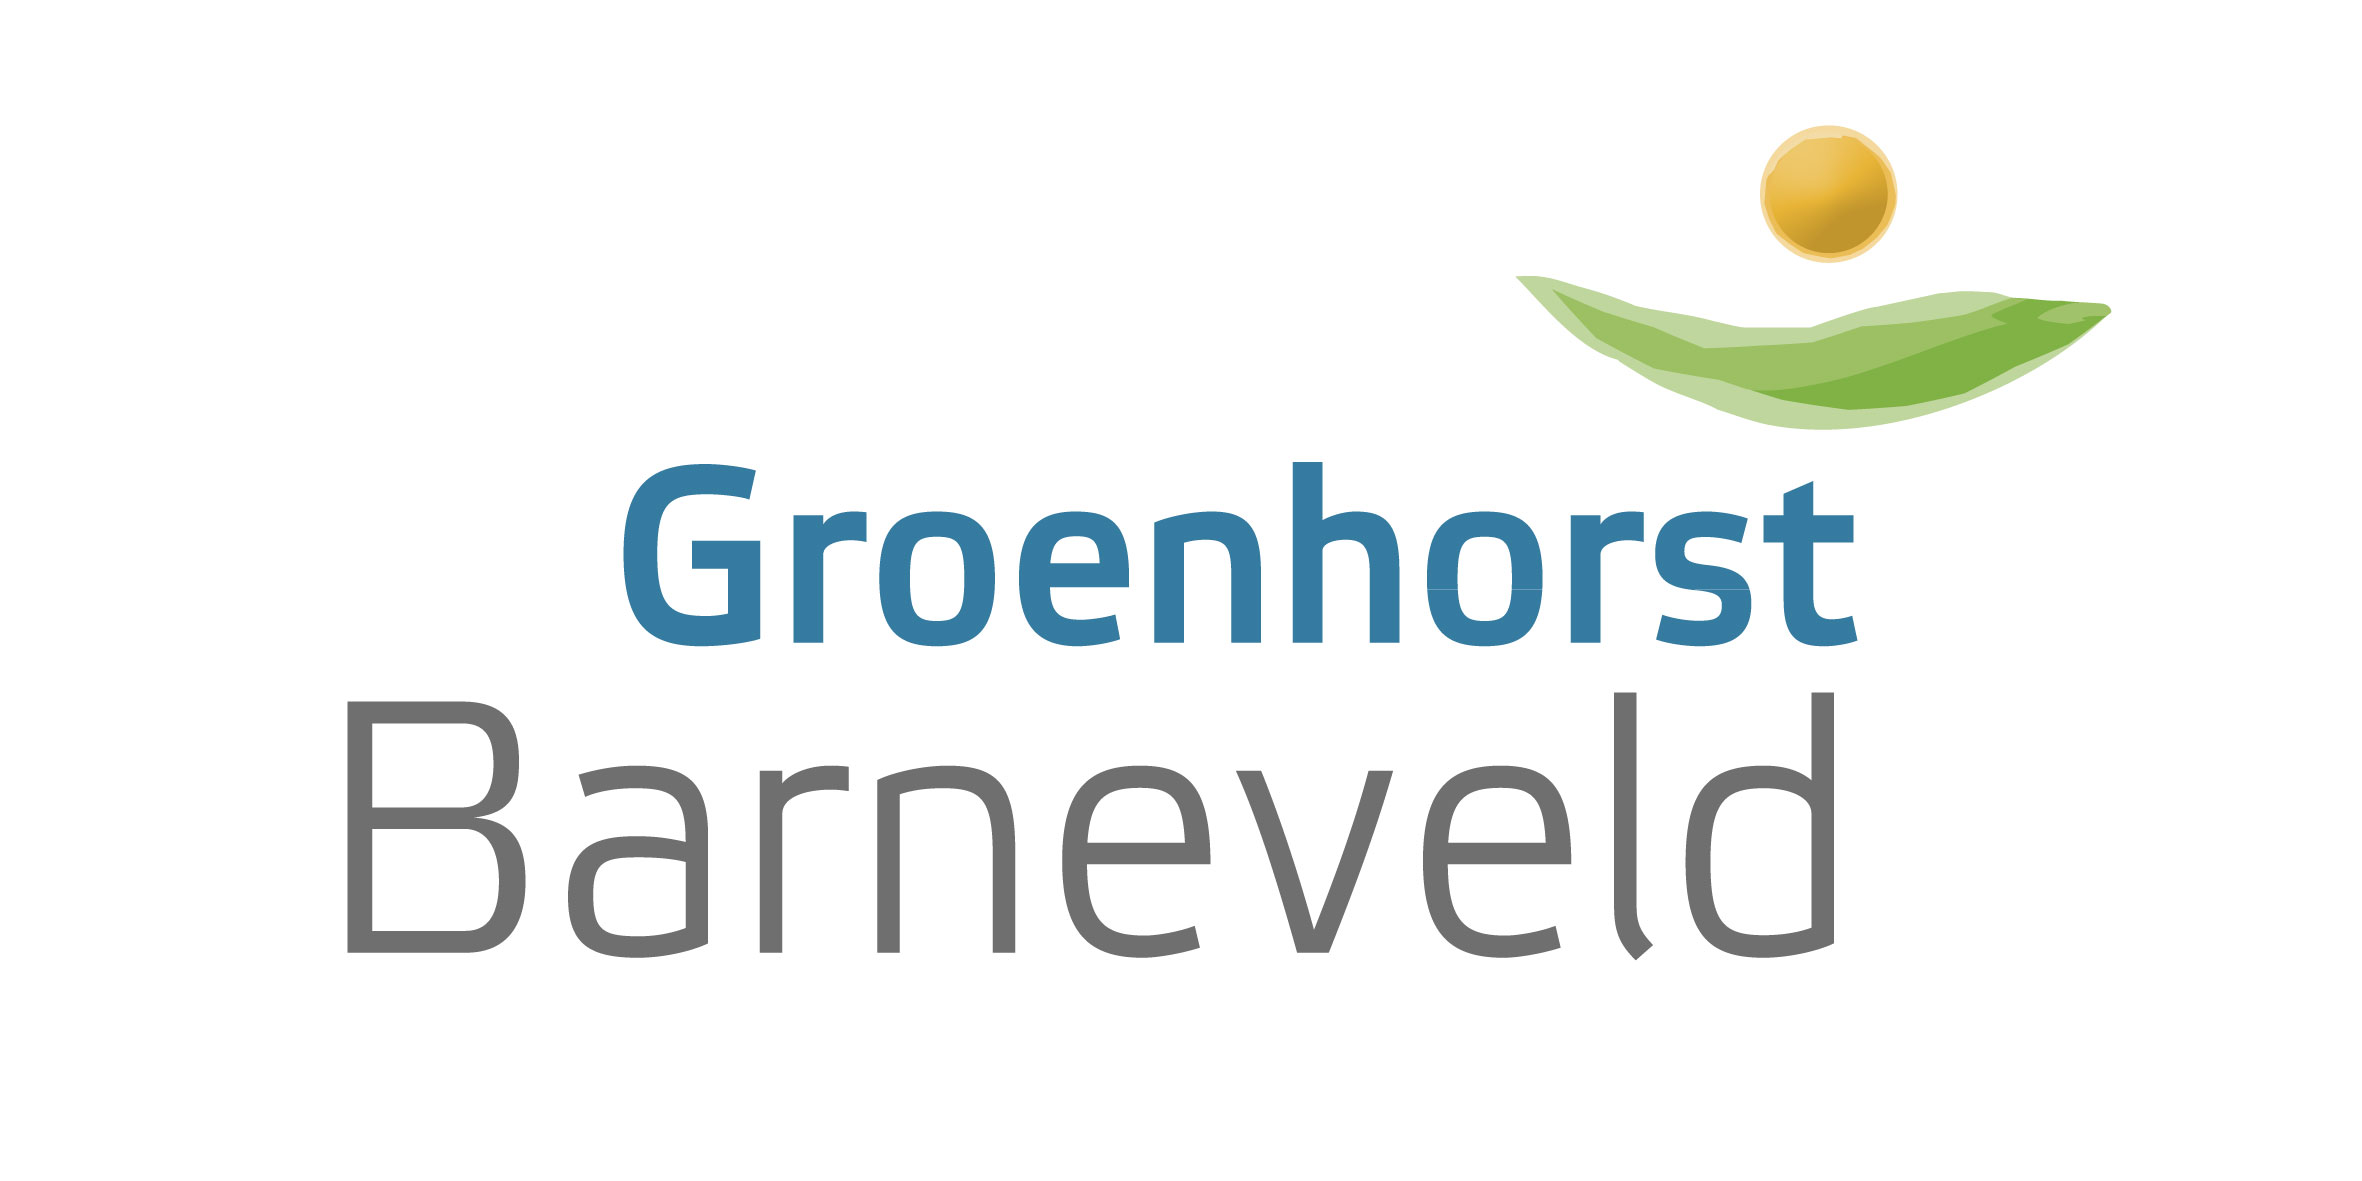 Groenhorst_Barneveld_logo_sep11